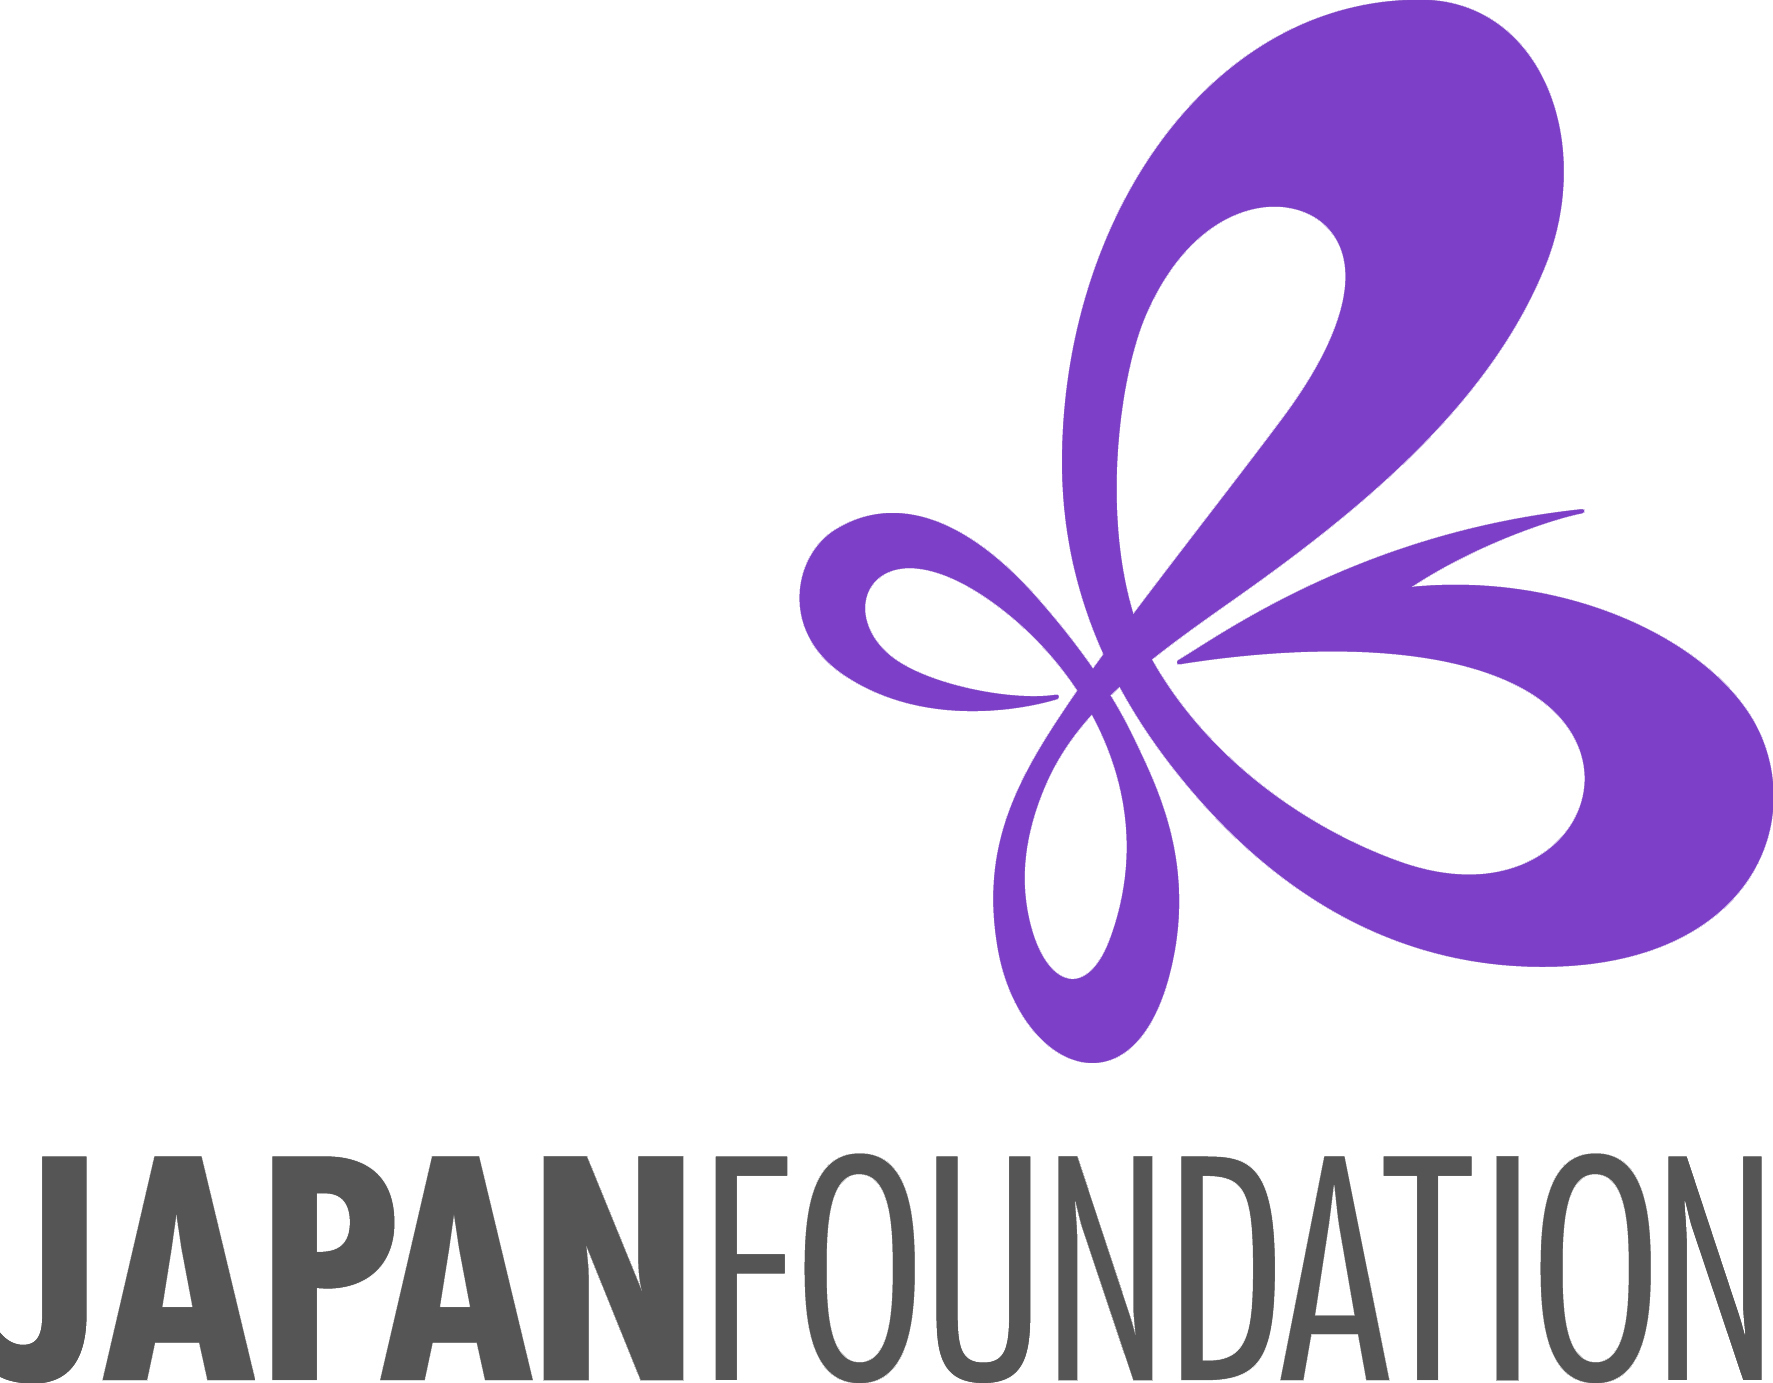 Link to information on Japan Foundation